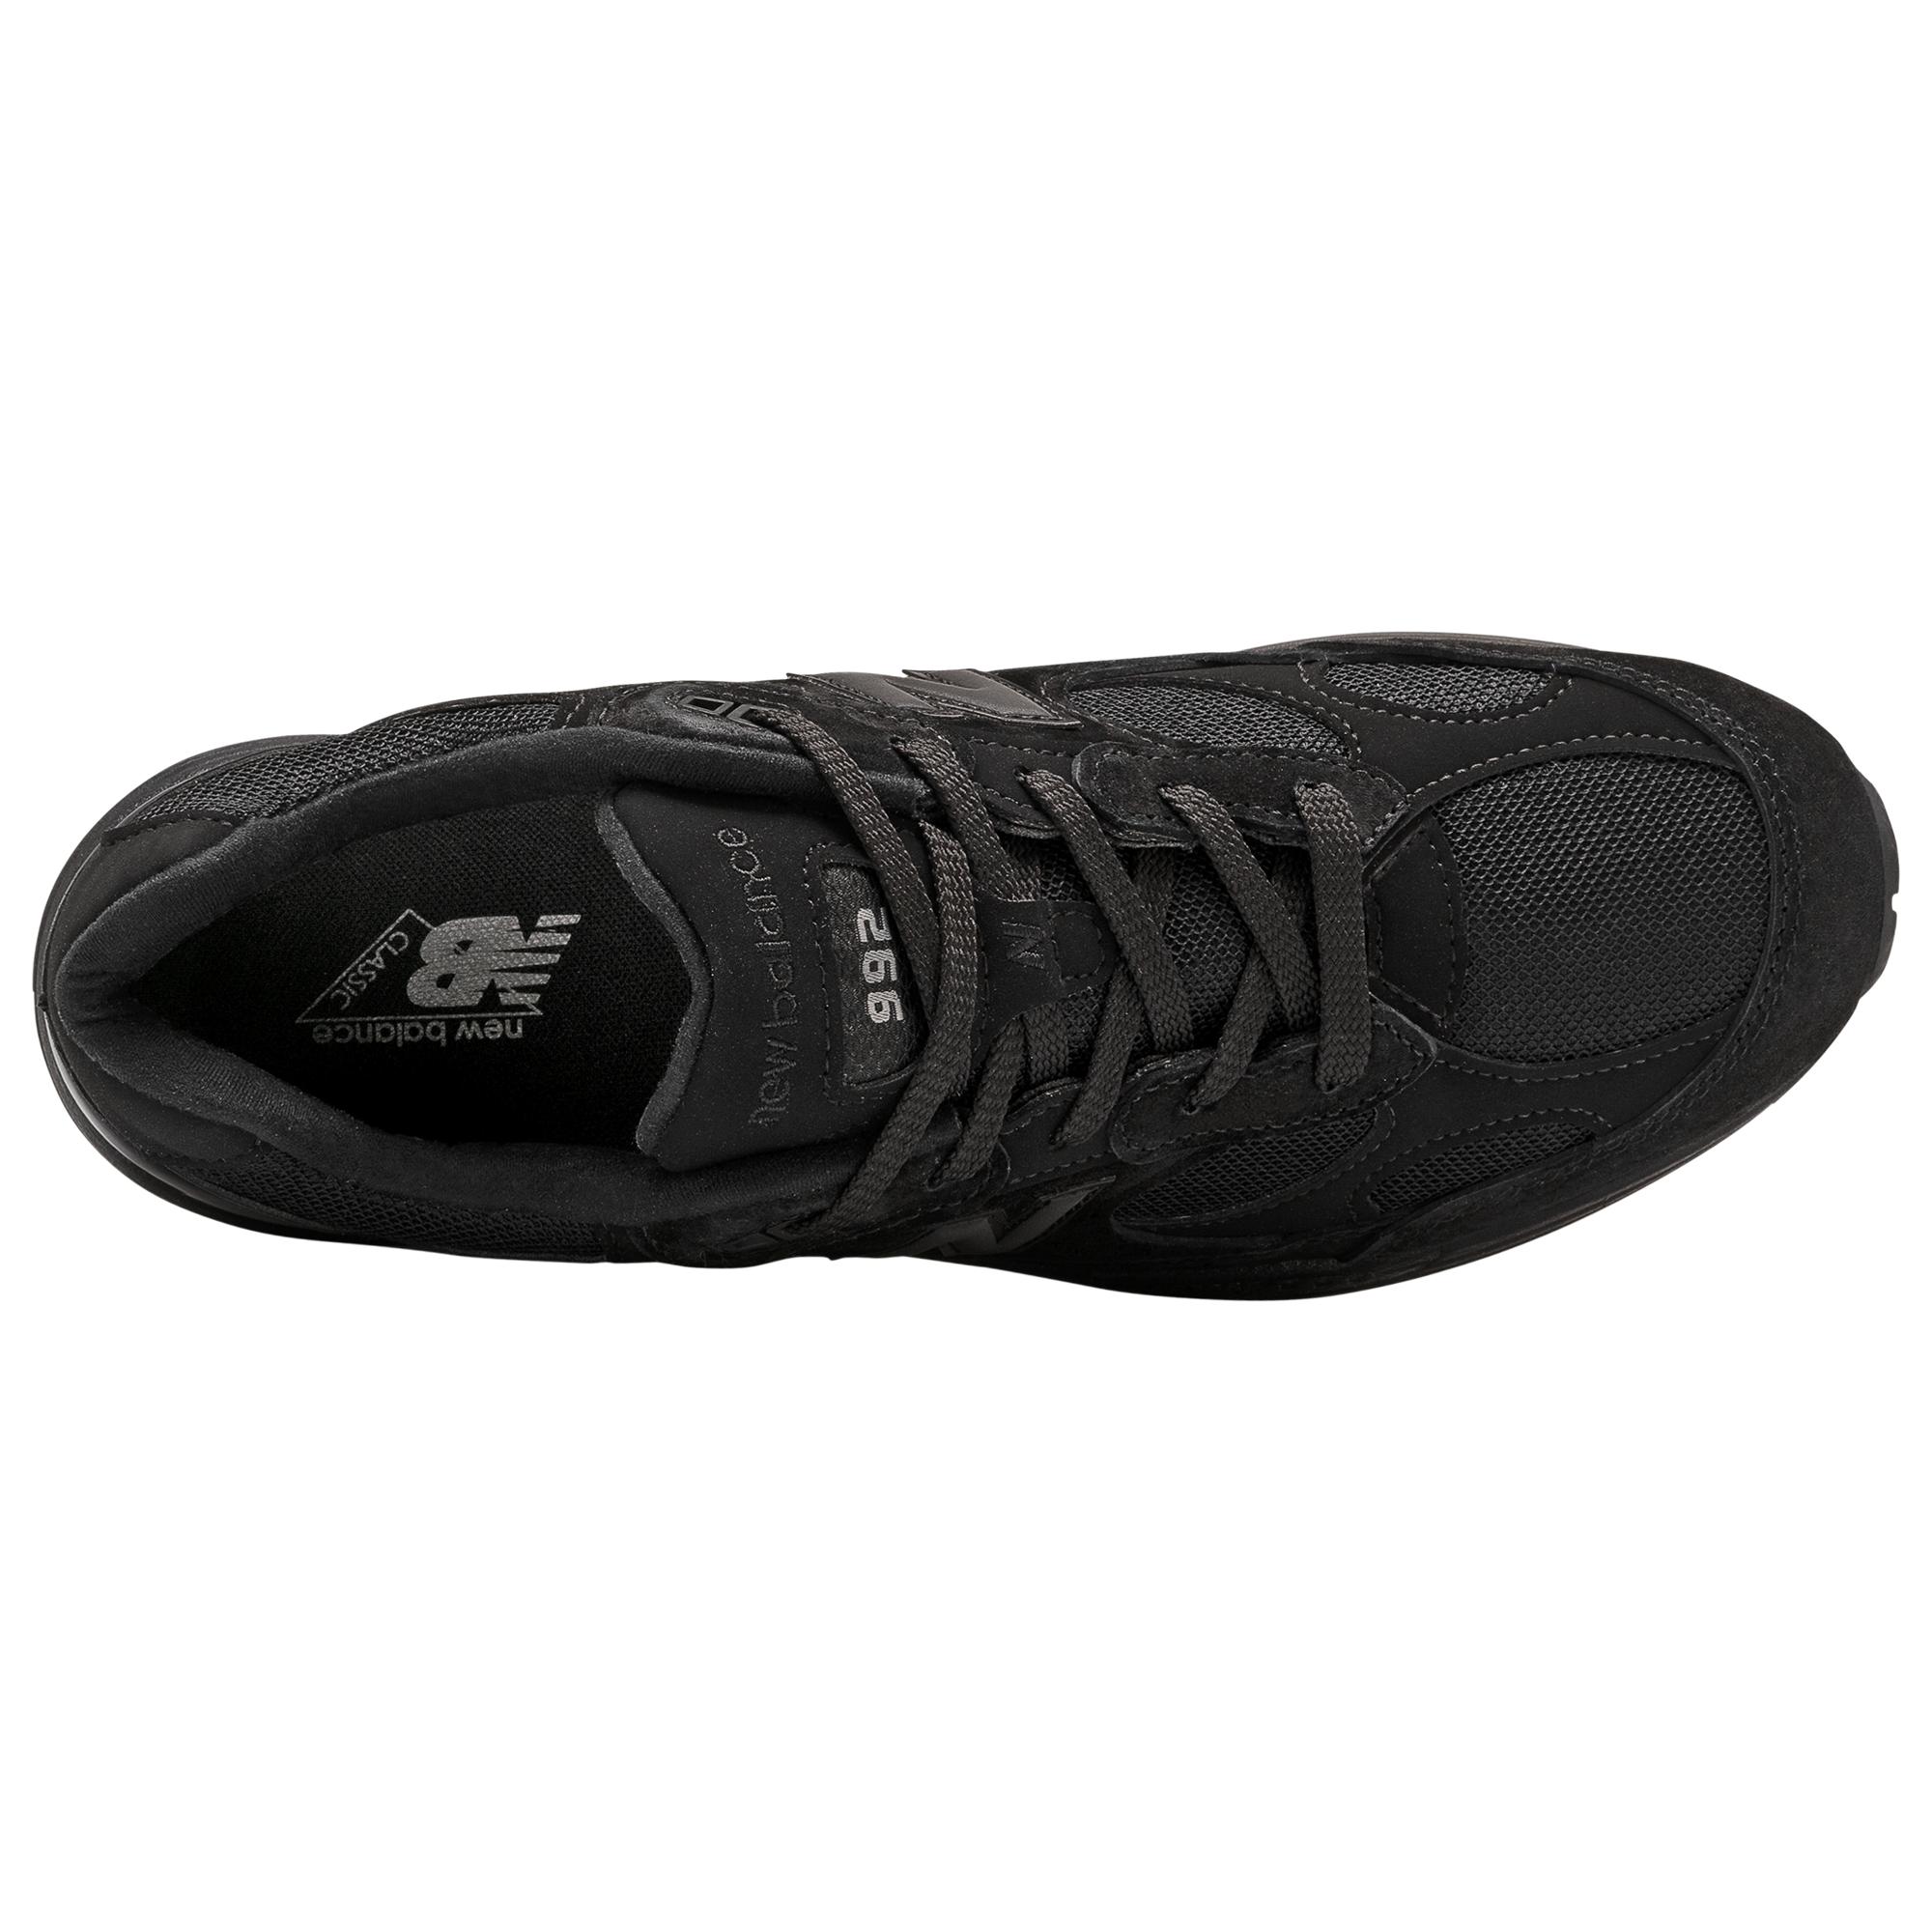 New Balance Lace 992v1 in Black/Black (Black) | Lyst